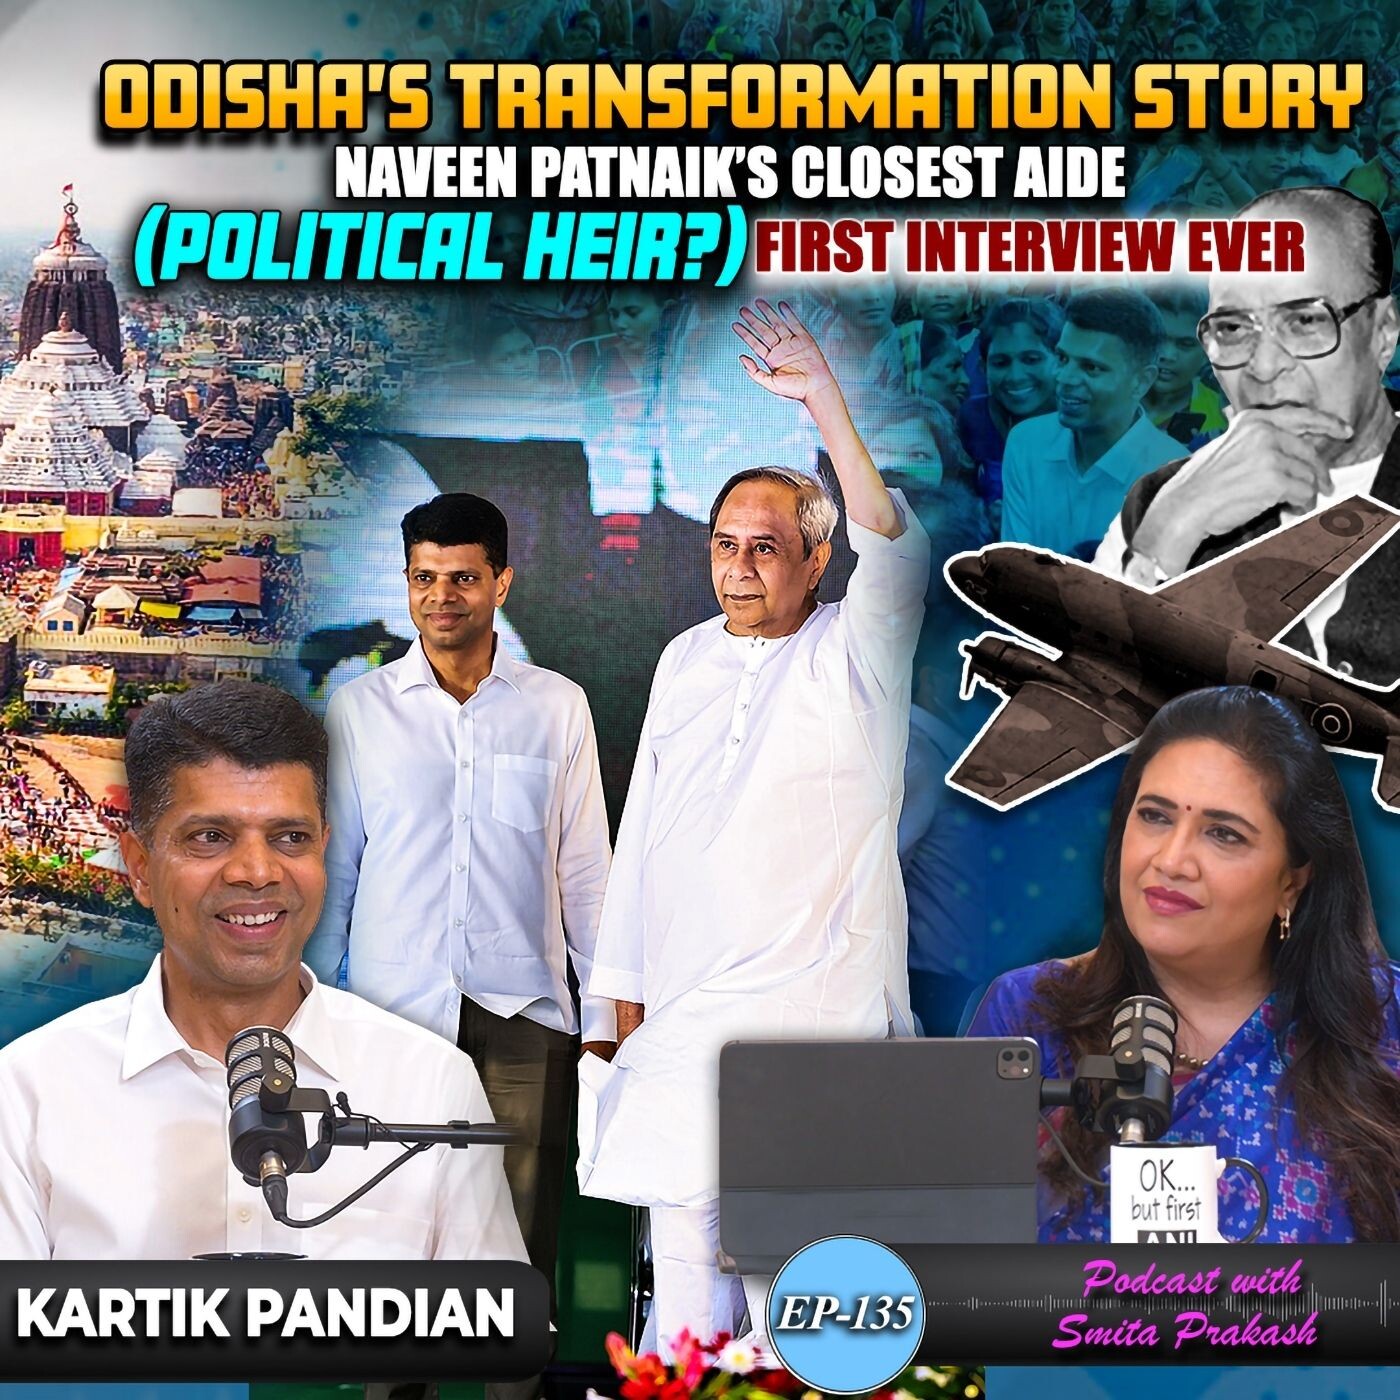 EP 135 - Kartik Pandian's First-Ever Interview: Is he the Political Heir to Odisha CM Naveen Patnaik?